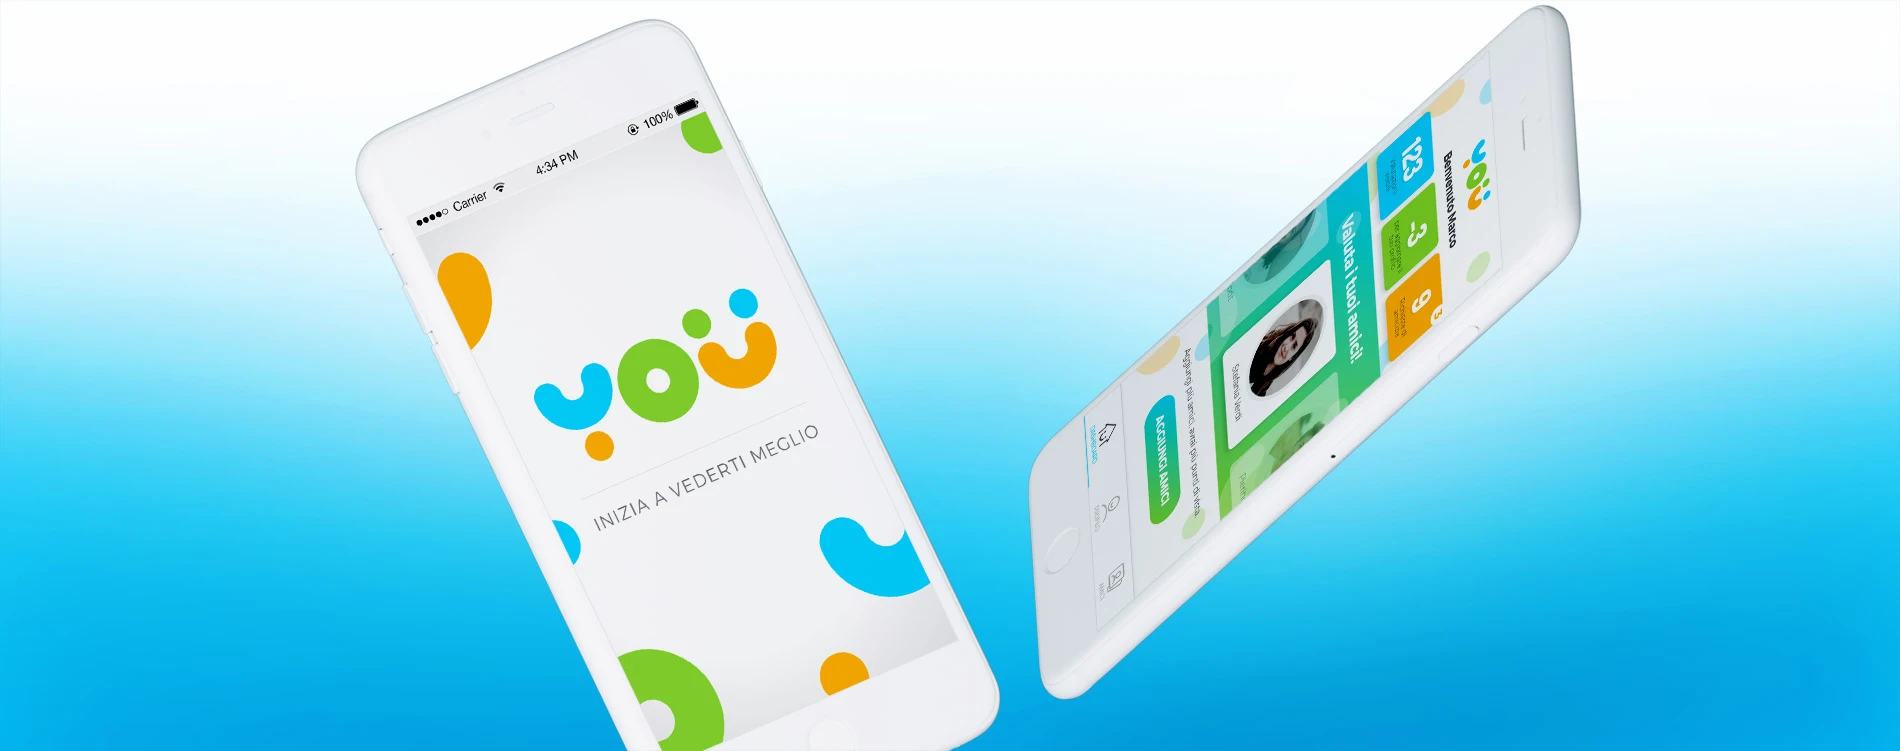 YOU - Cross platform app design